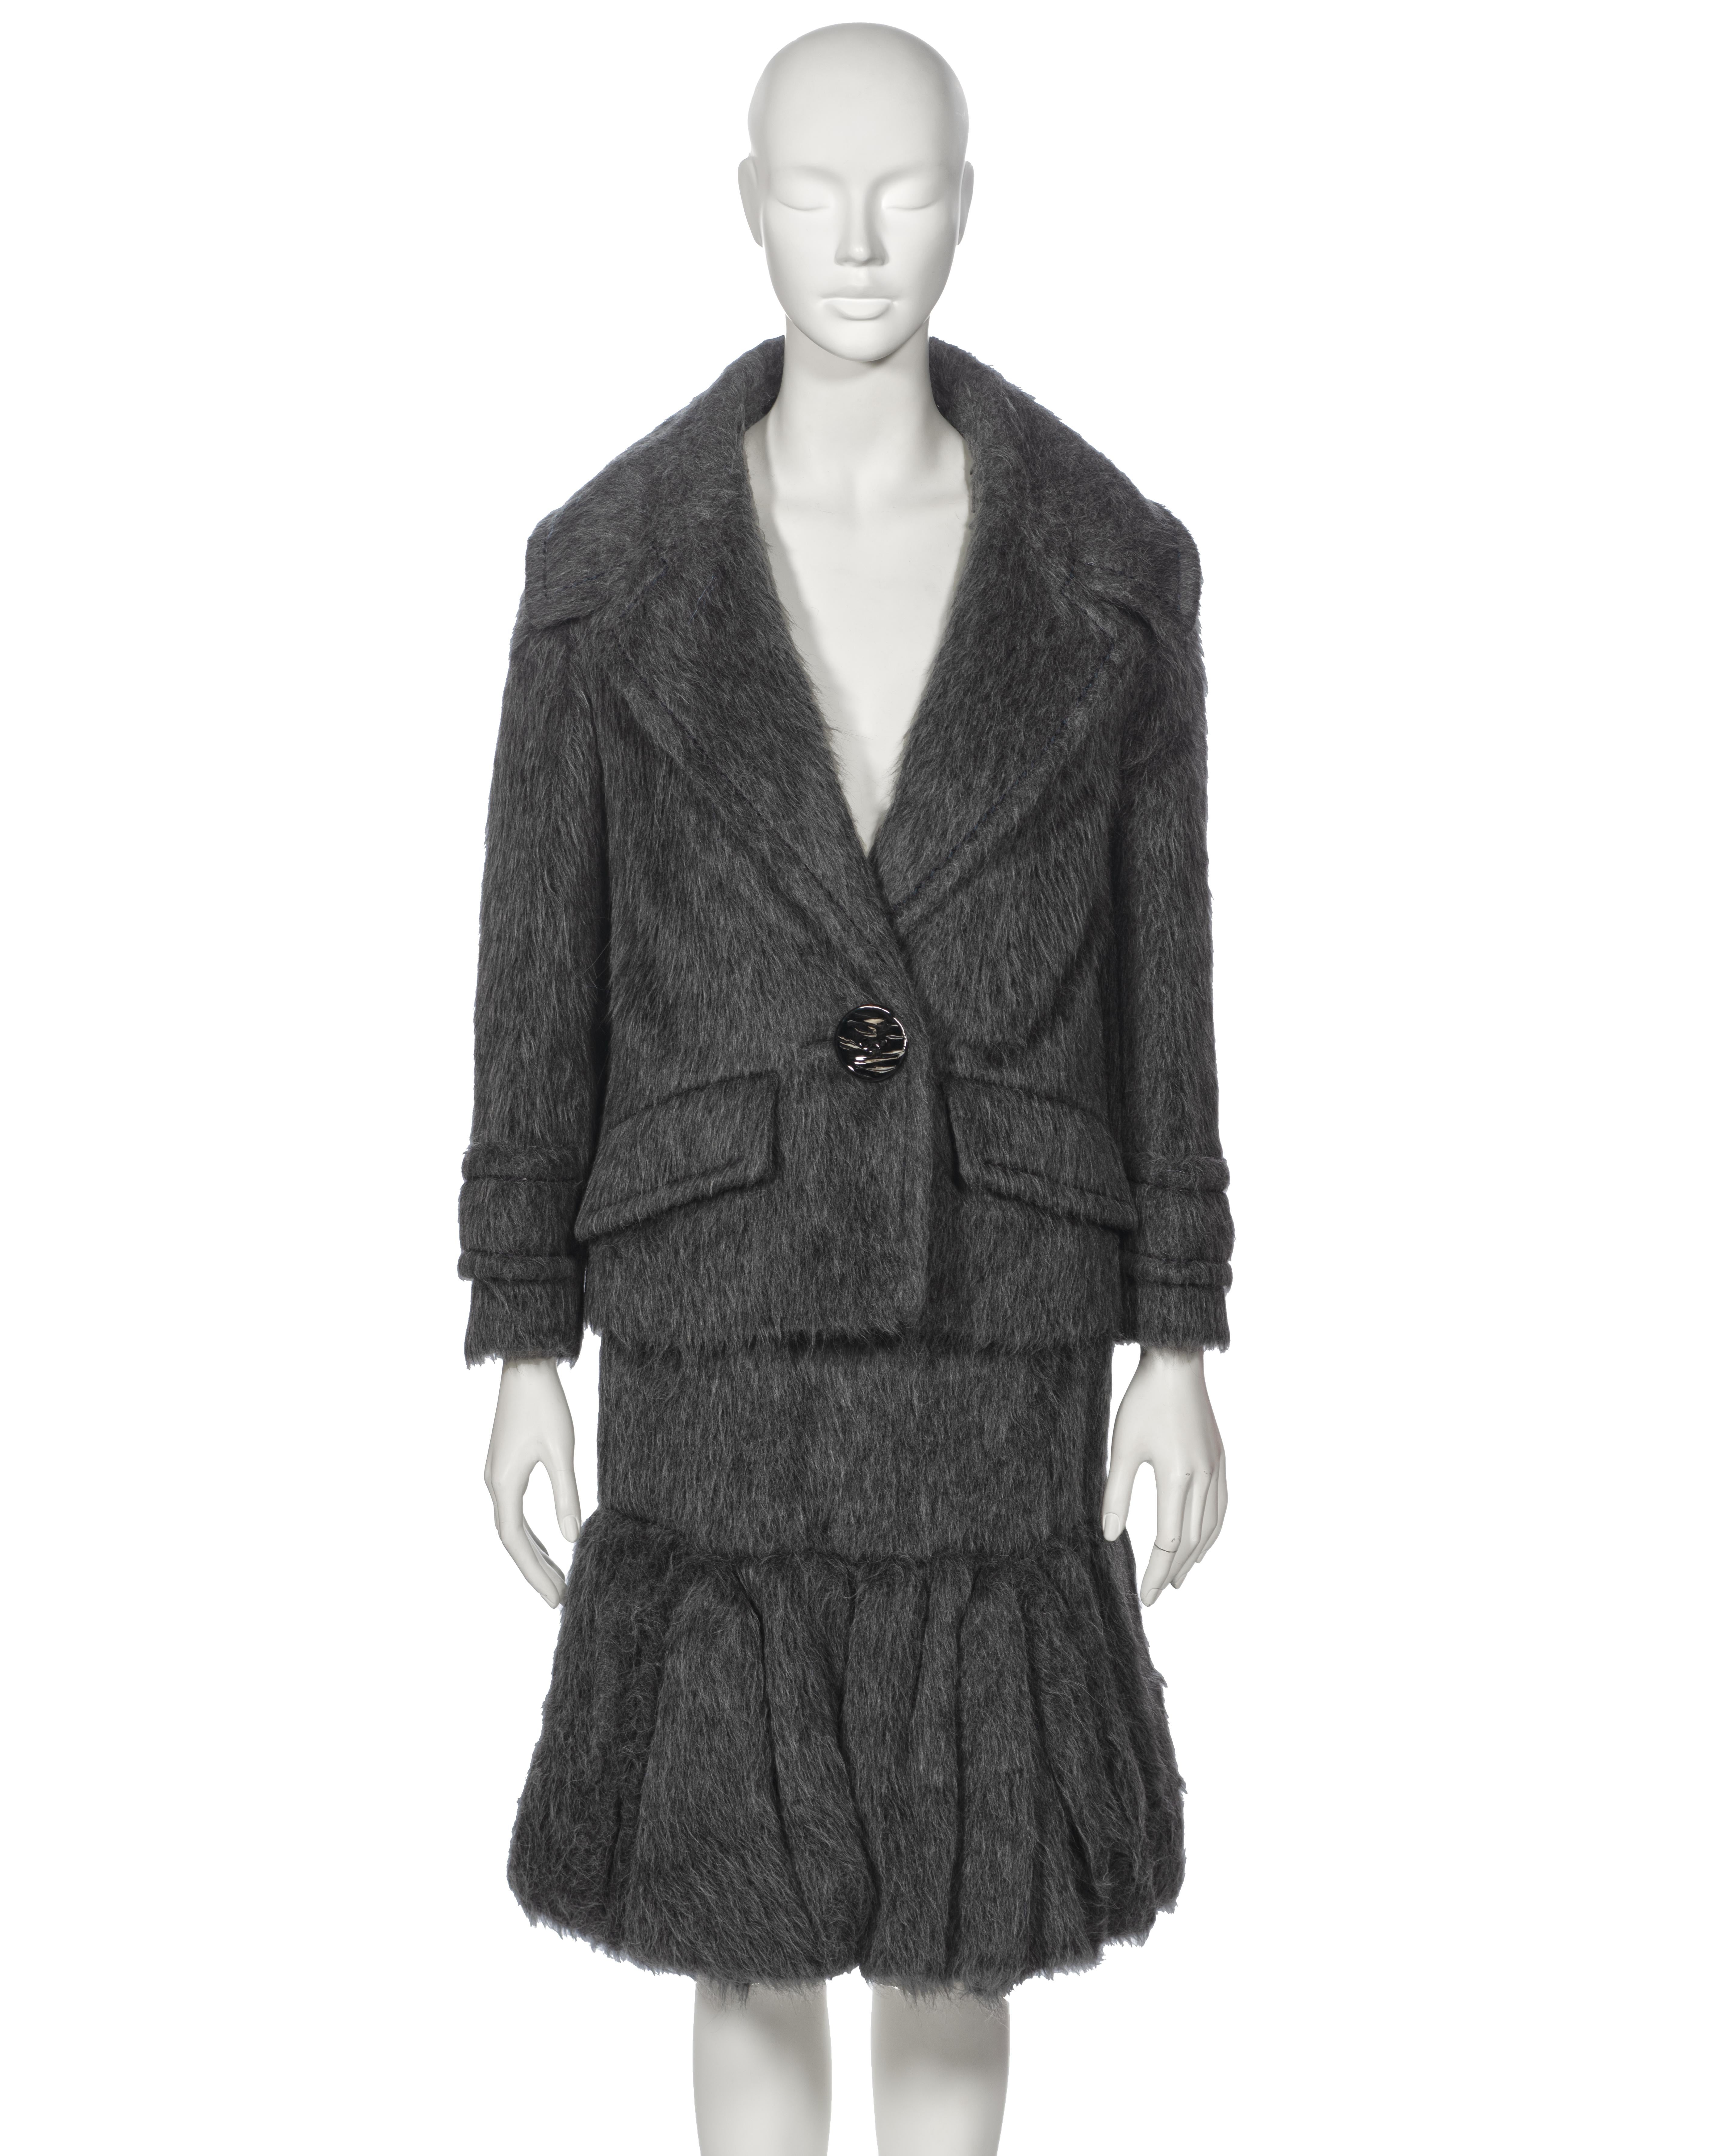 Prada by Miuccia Prada Grey Brushed Alpaca Silk Jacket and Skirt Suit, fw 2017 For Sale 10